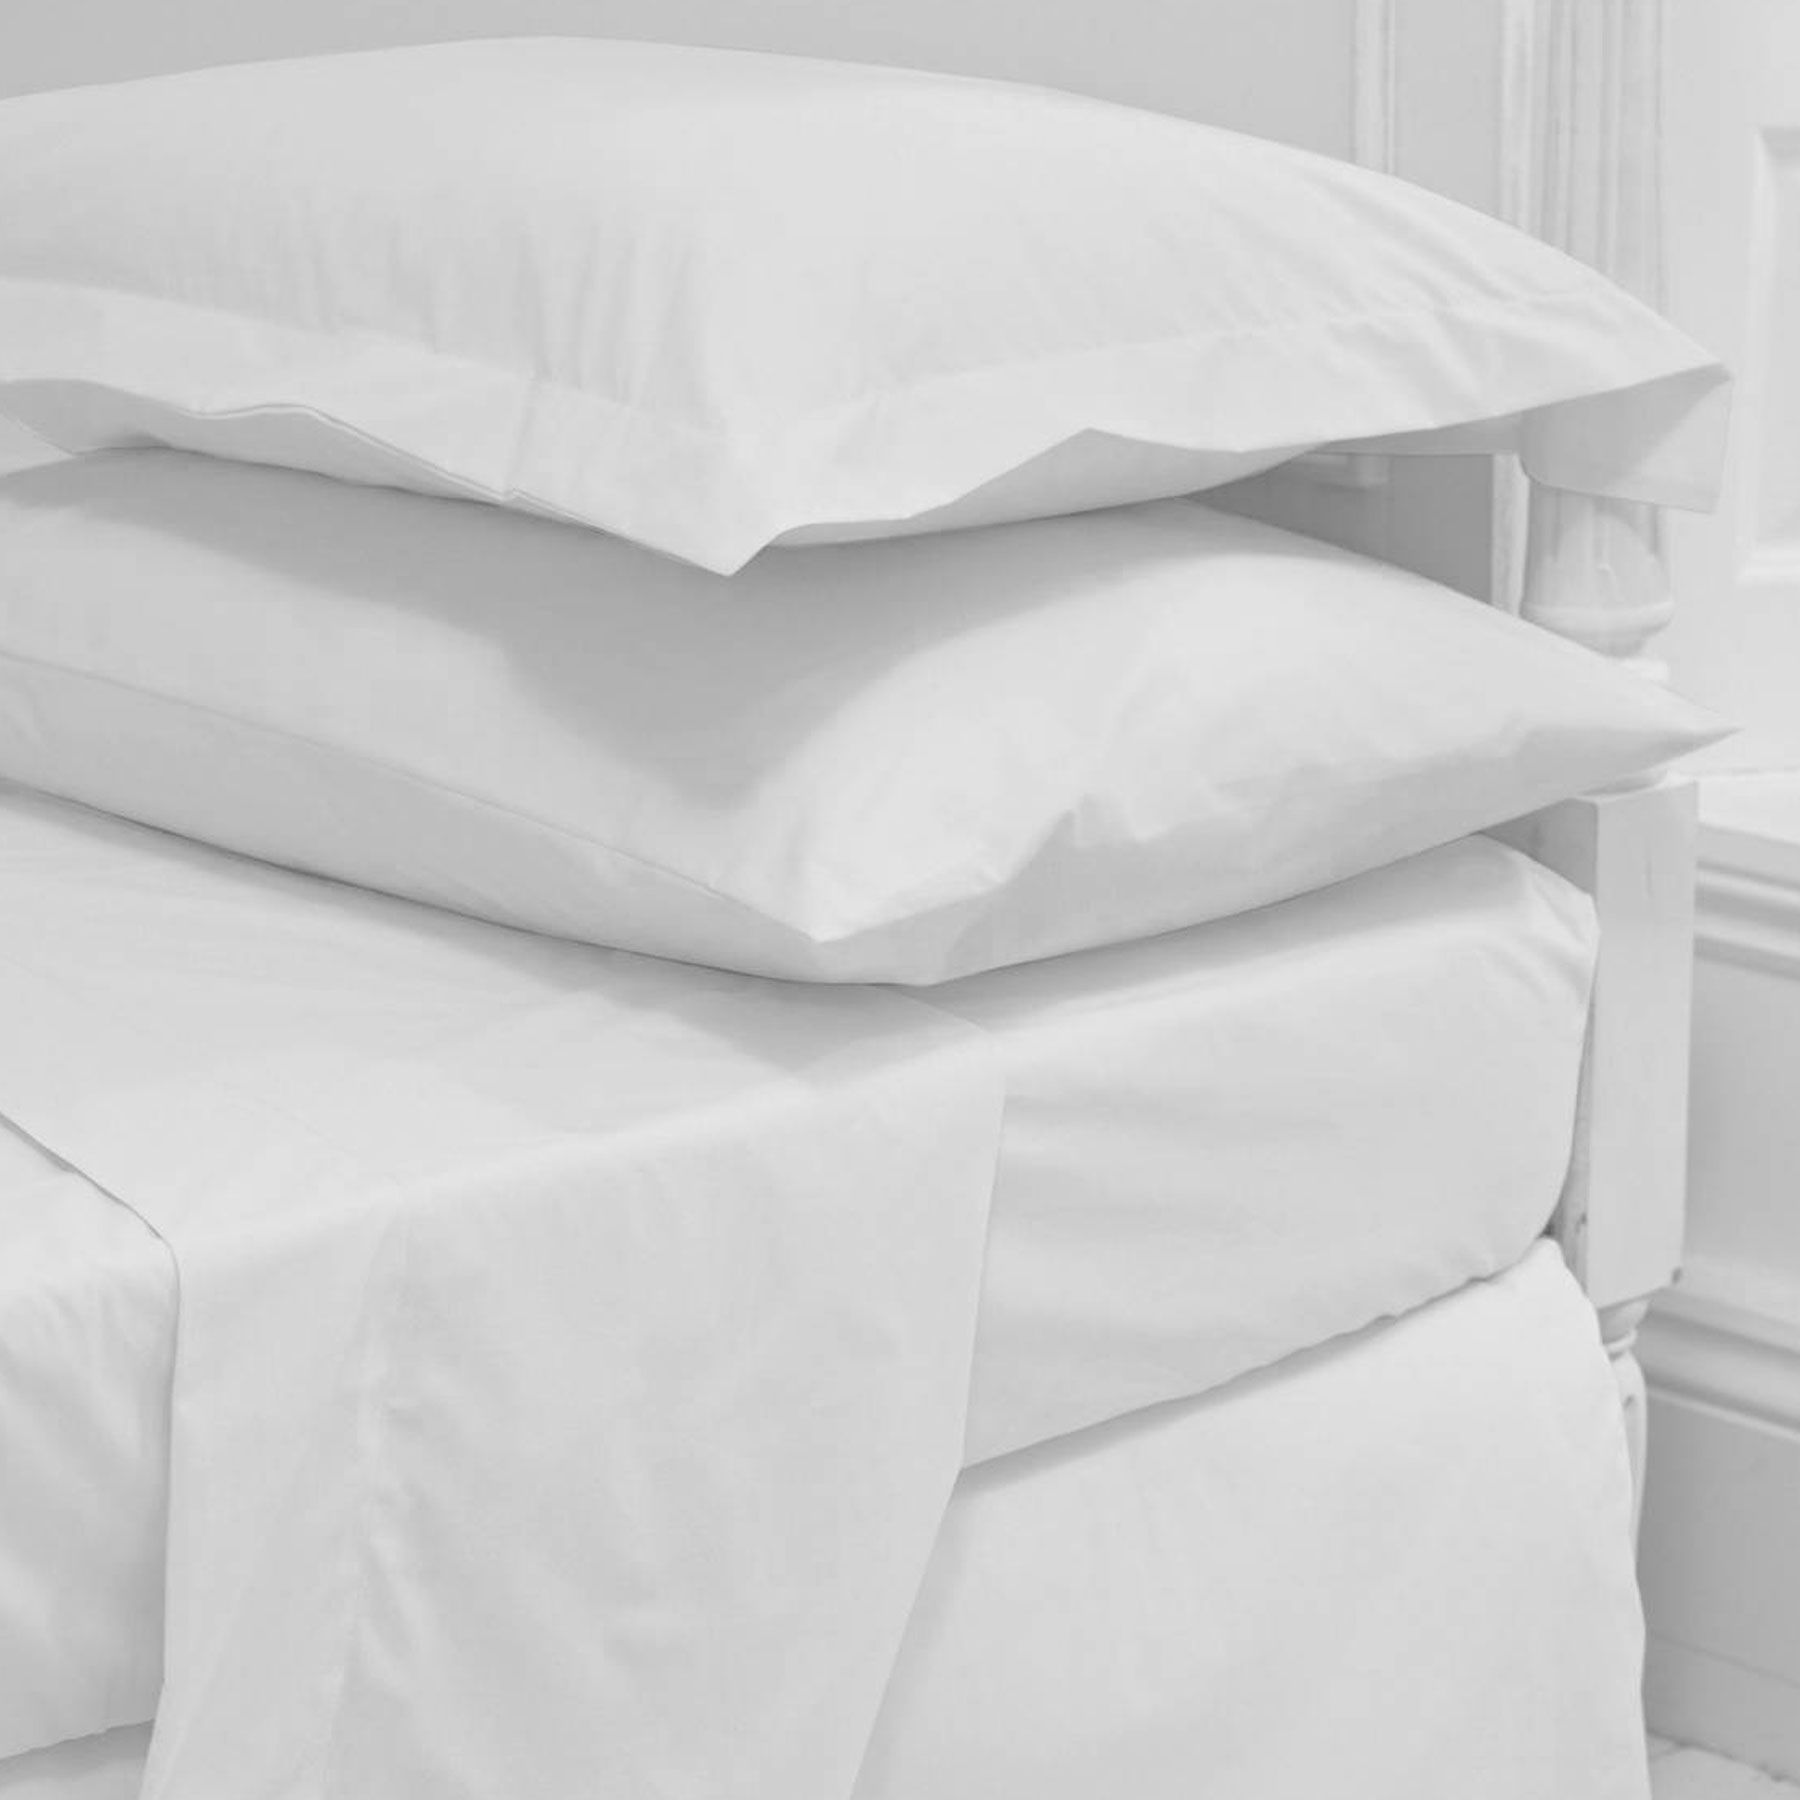 Flat Bed Sheets